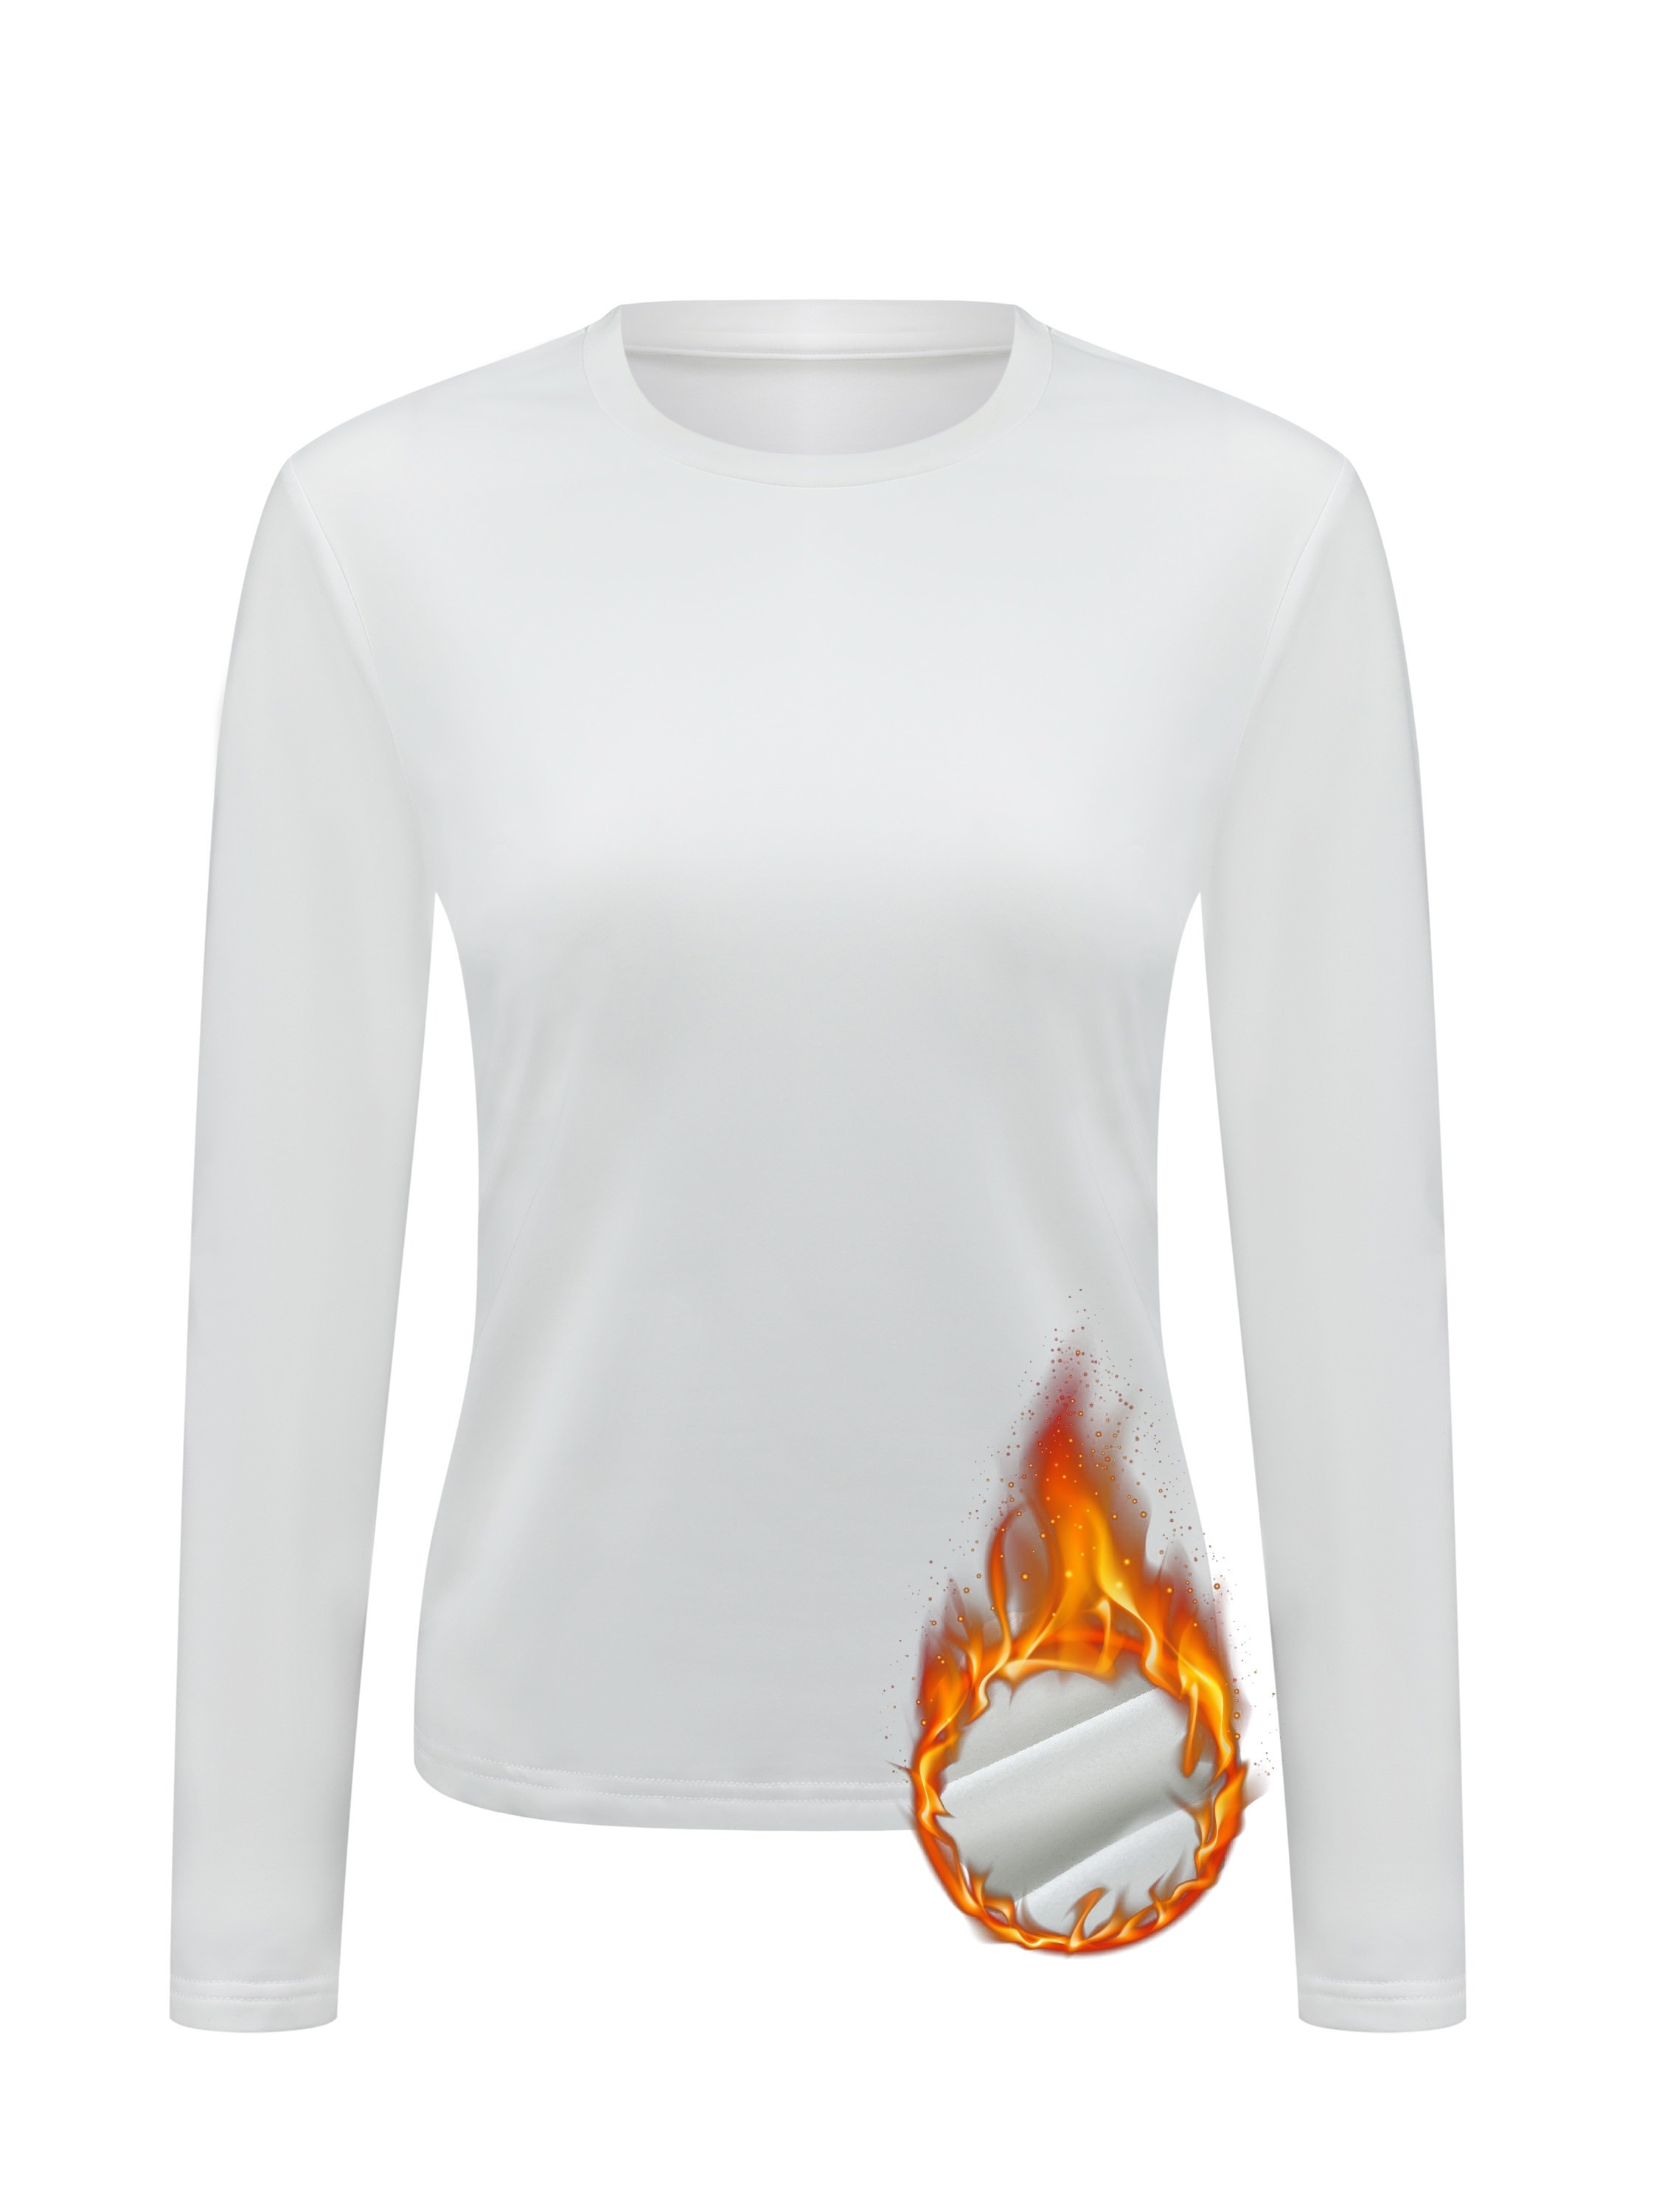 Camisas térmicas de manga larga para mujer, cuello redondo, forro polar,  camiseta térmica sin mangas, chaleco de invierno para clima adecuado